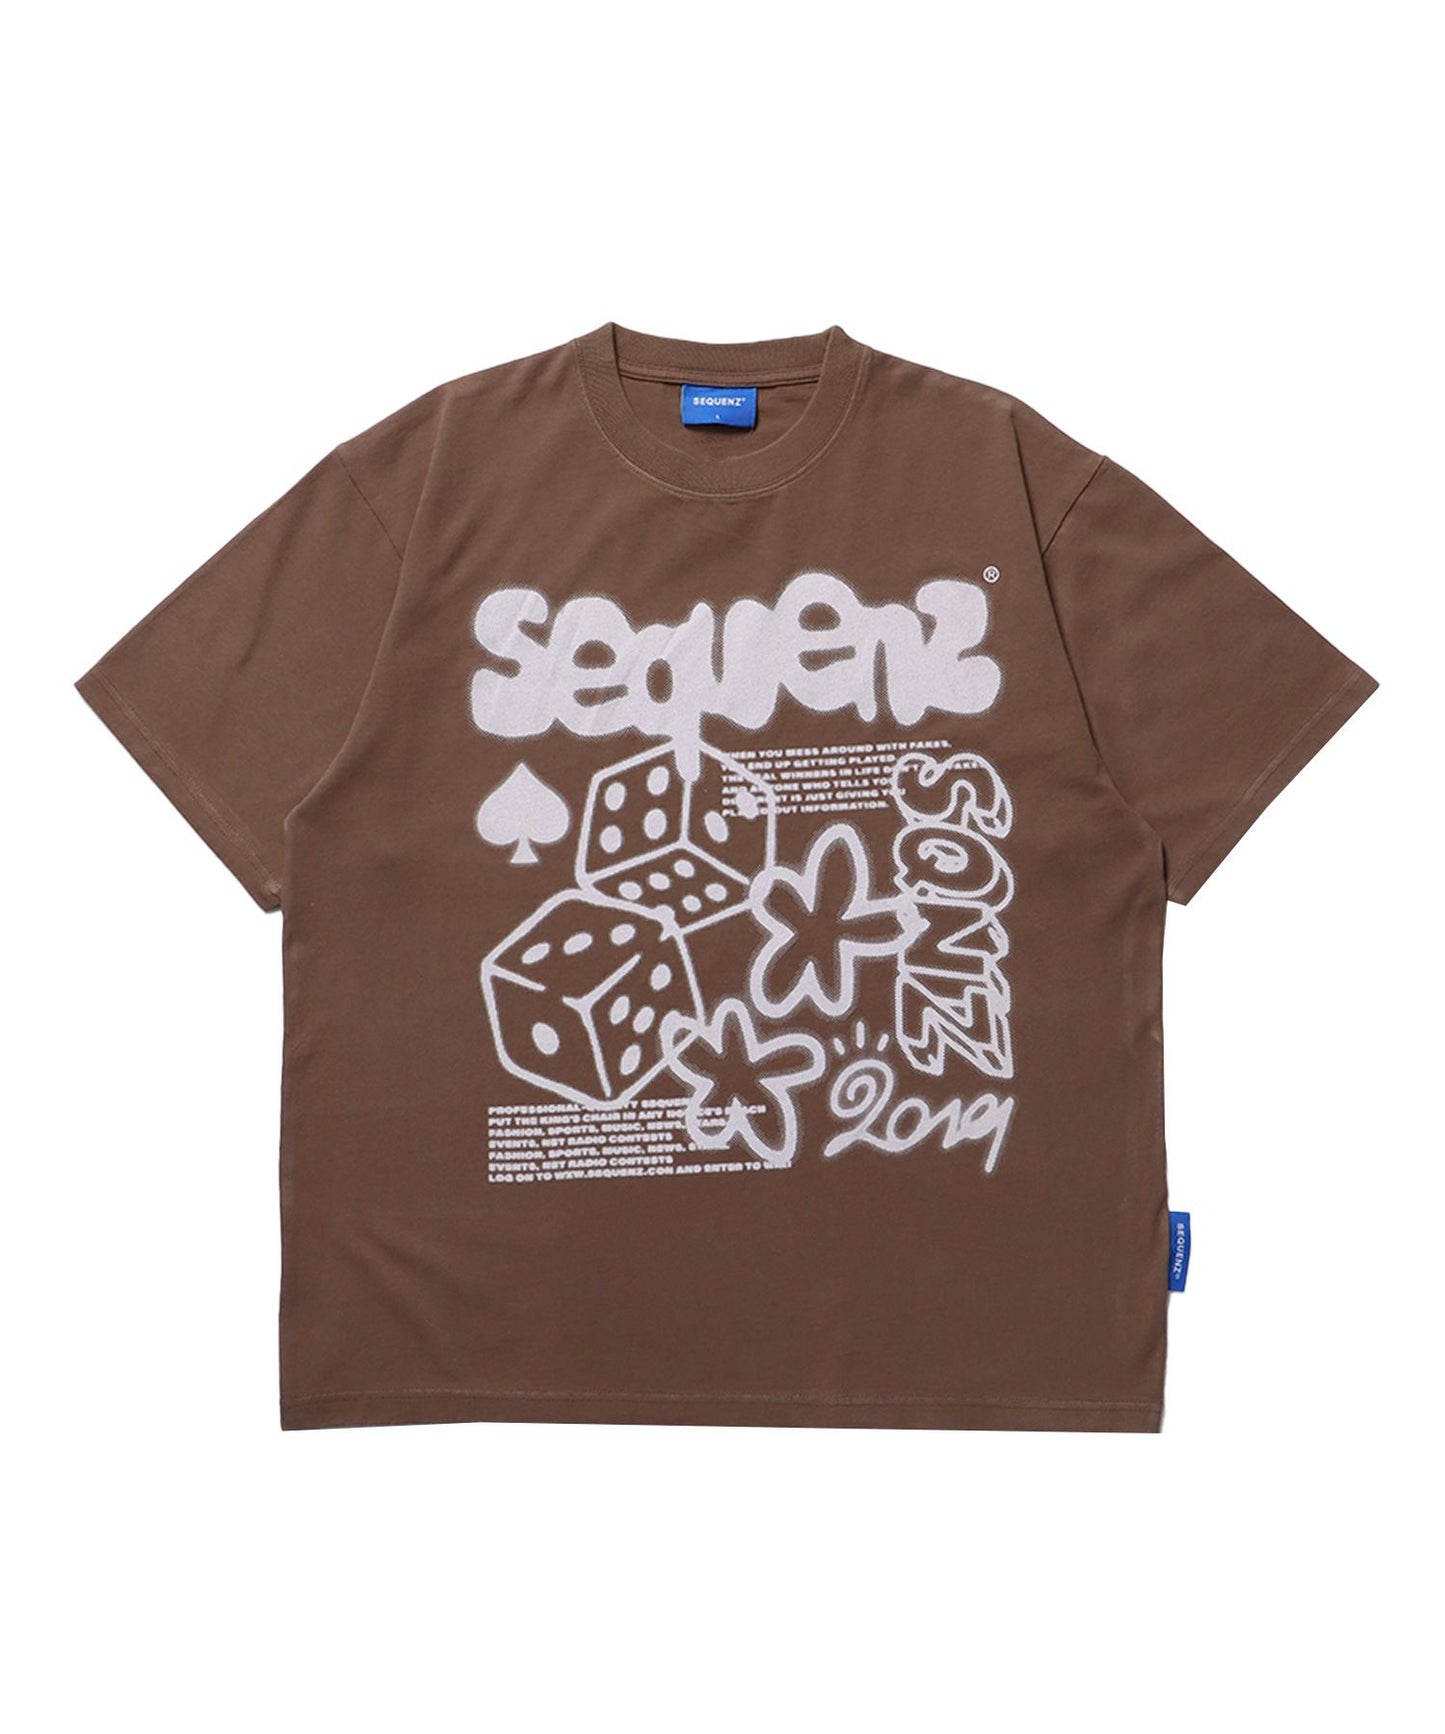 【SEQUENZ】NVL EX COOLAGE SST / 半袖Tシャツ クルーネック ブランドロゴ ハードバイオ ダイス フラワー モカ